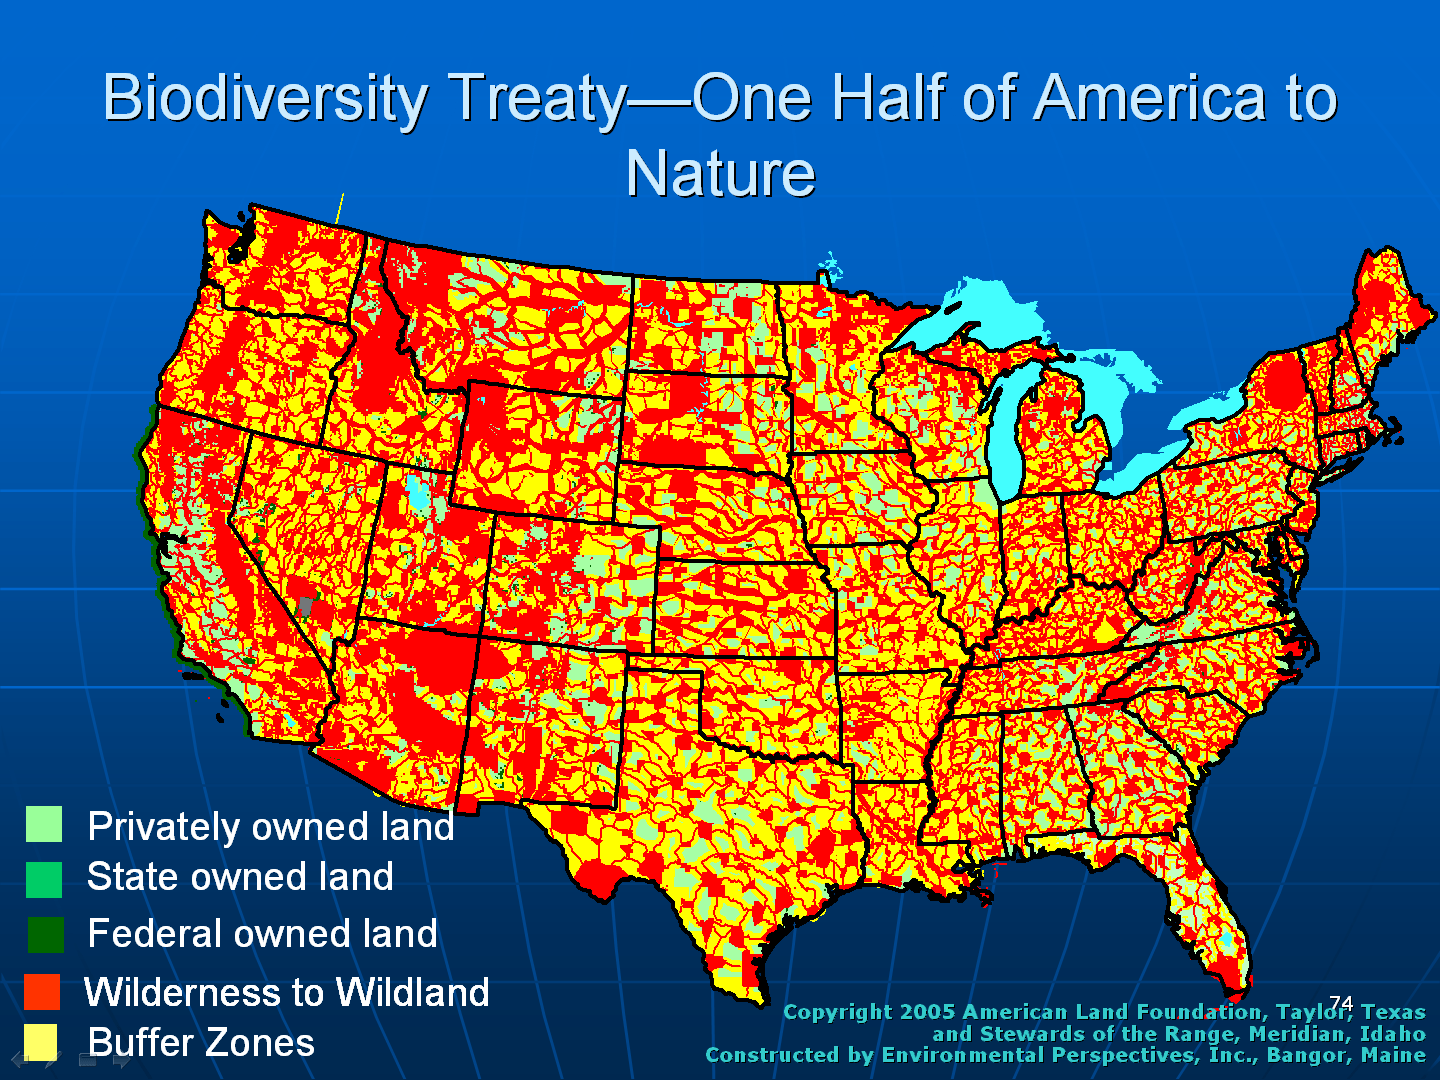 A Biodiversity Treaty 